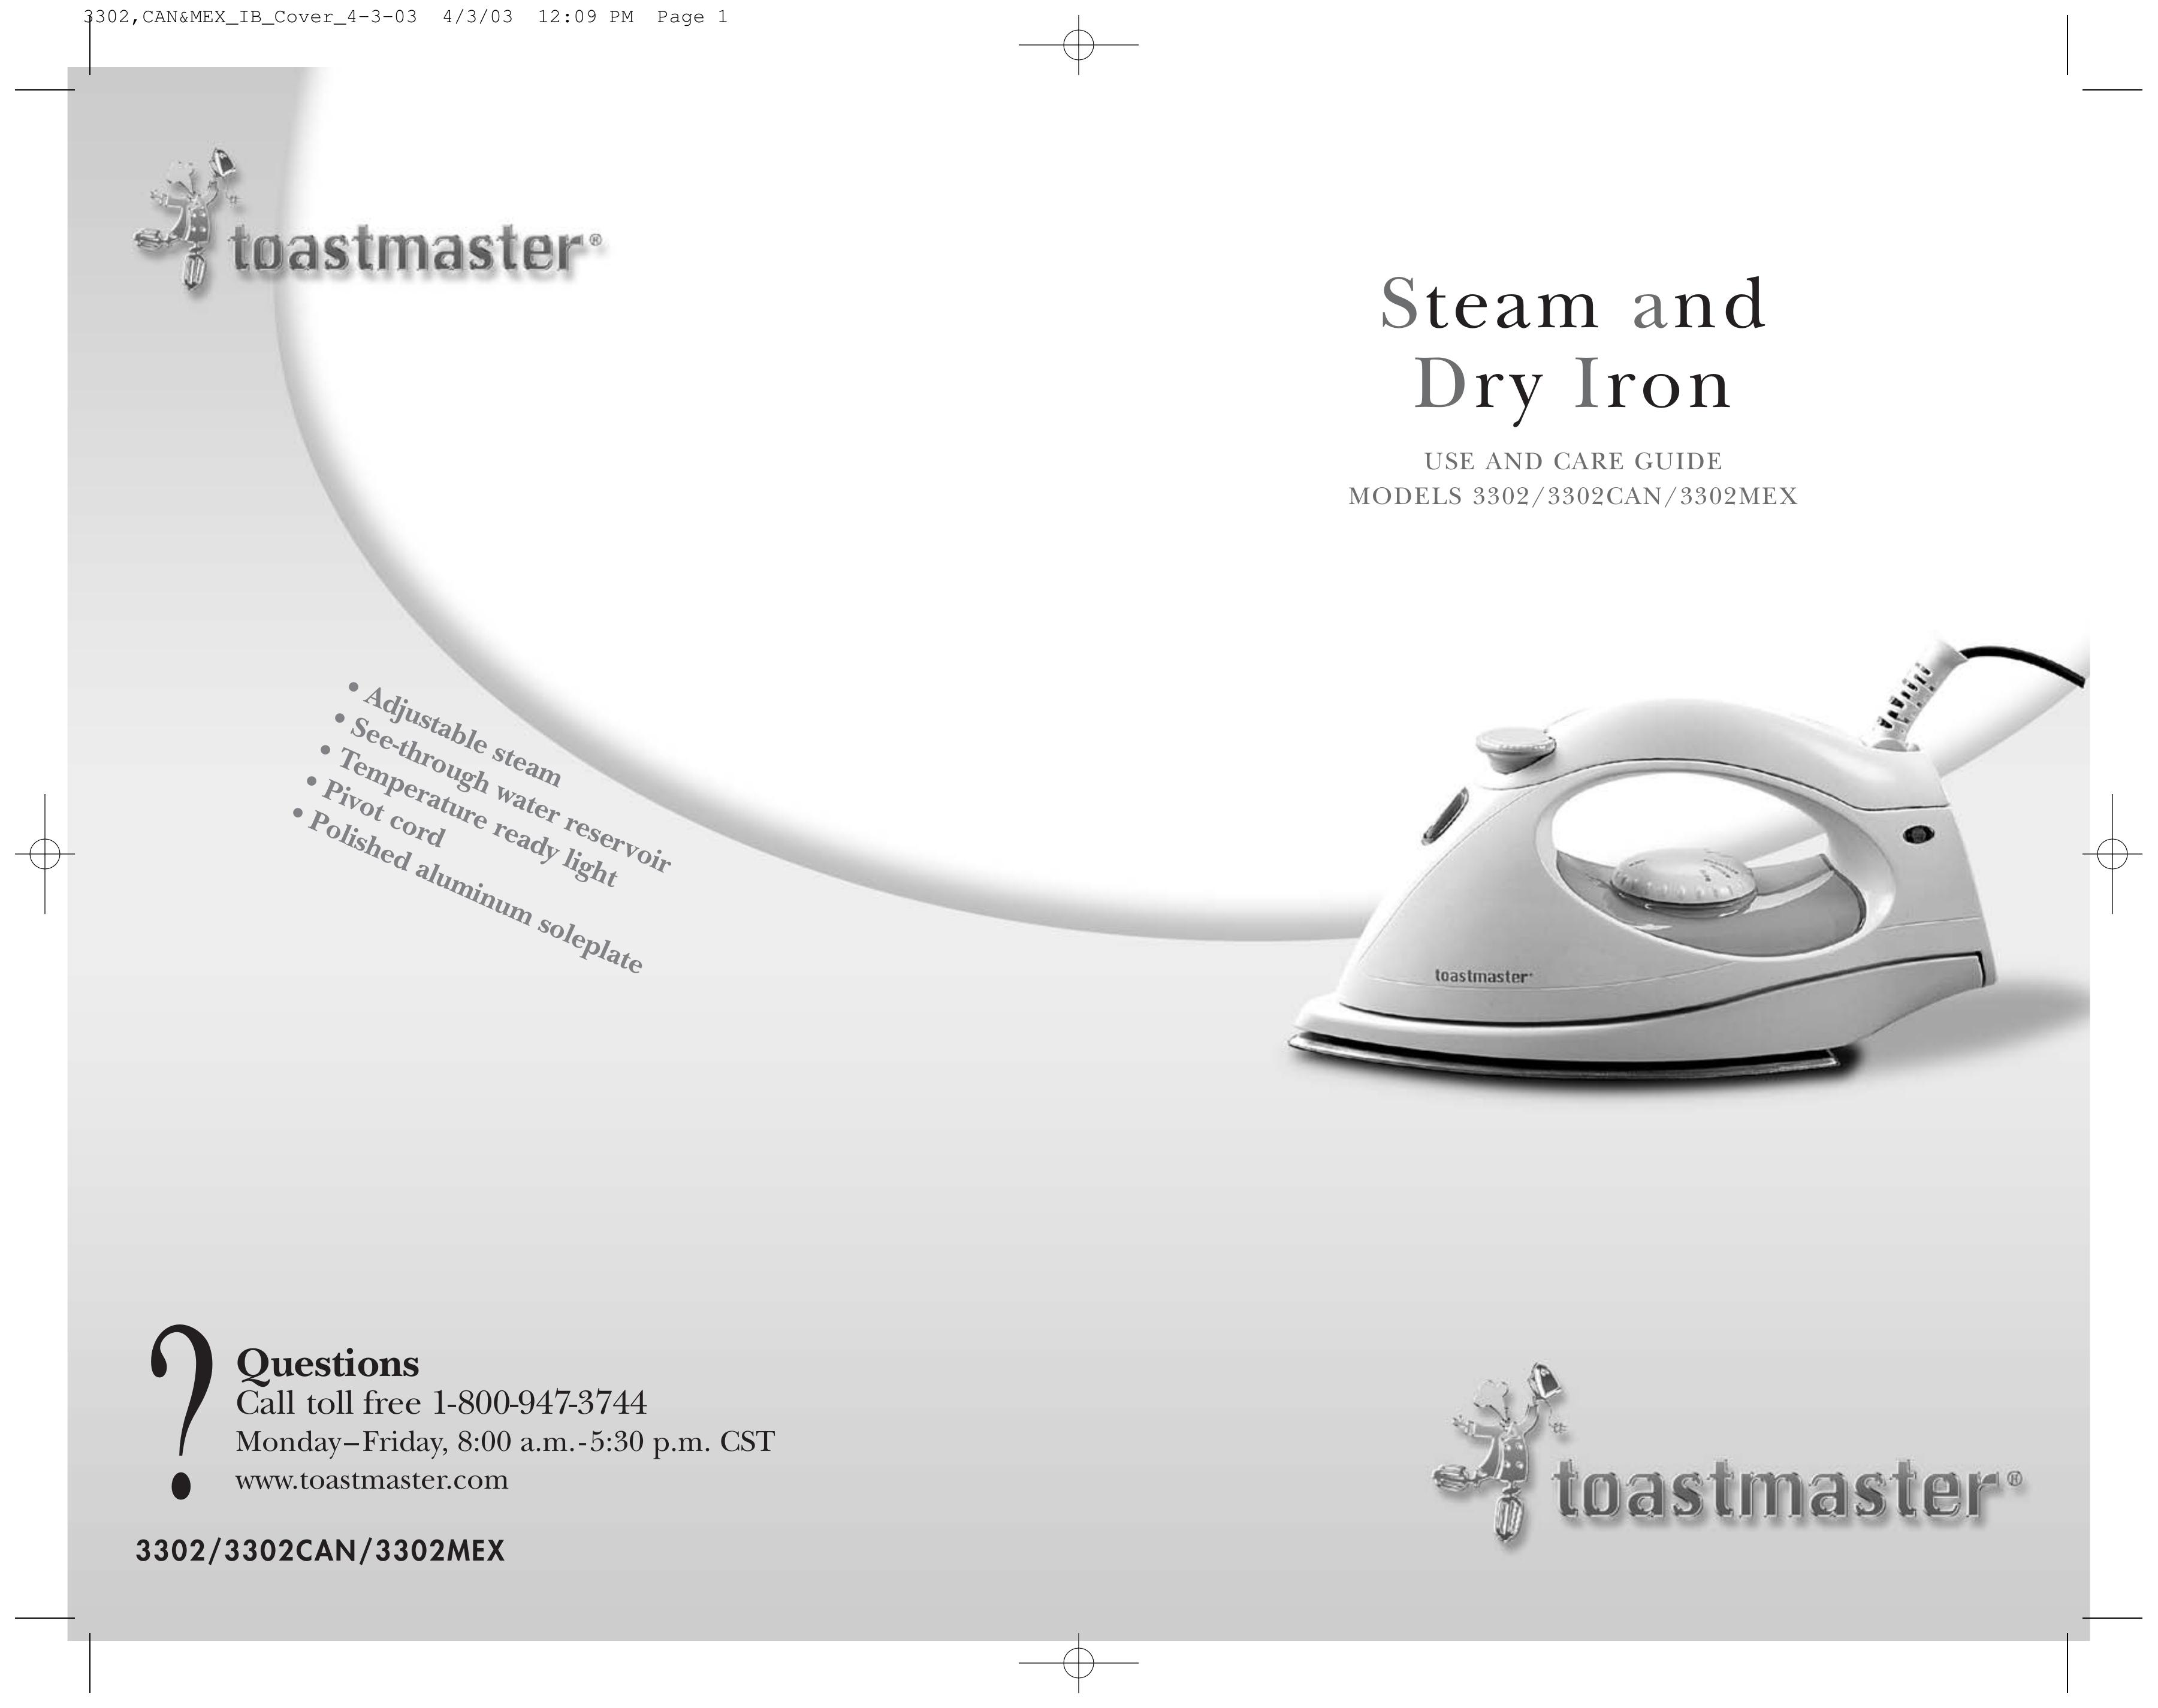 Toastmaster 3302MEX Iron User Manual